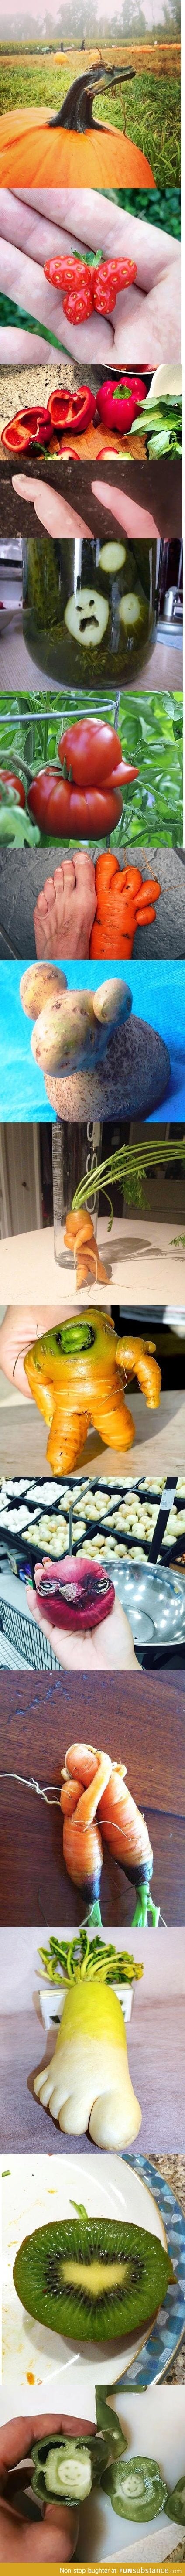 don't mind me i'm just a vegetable